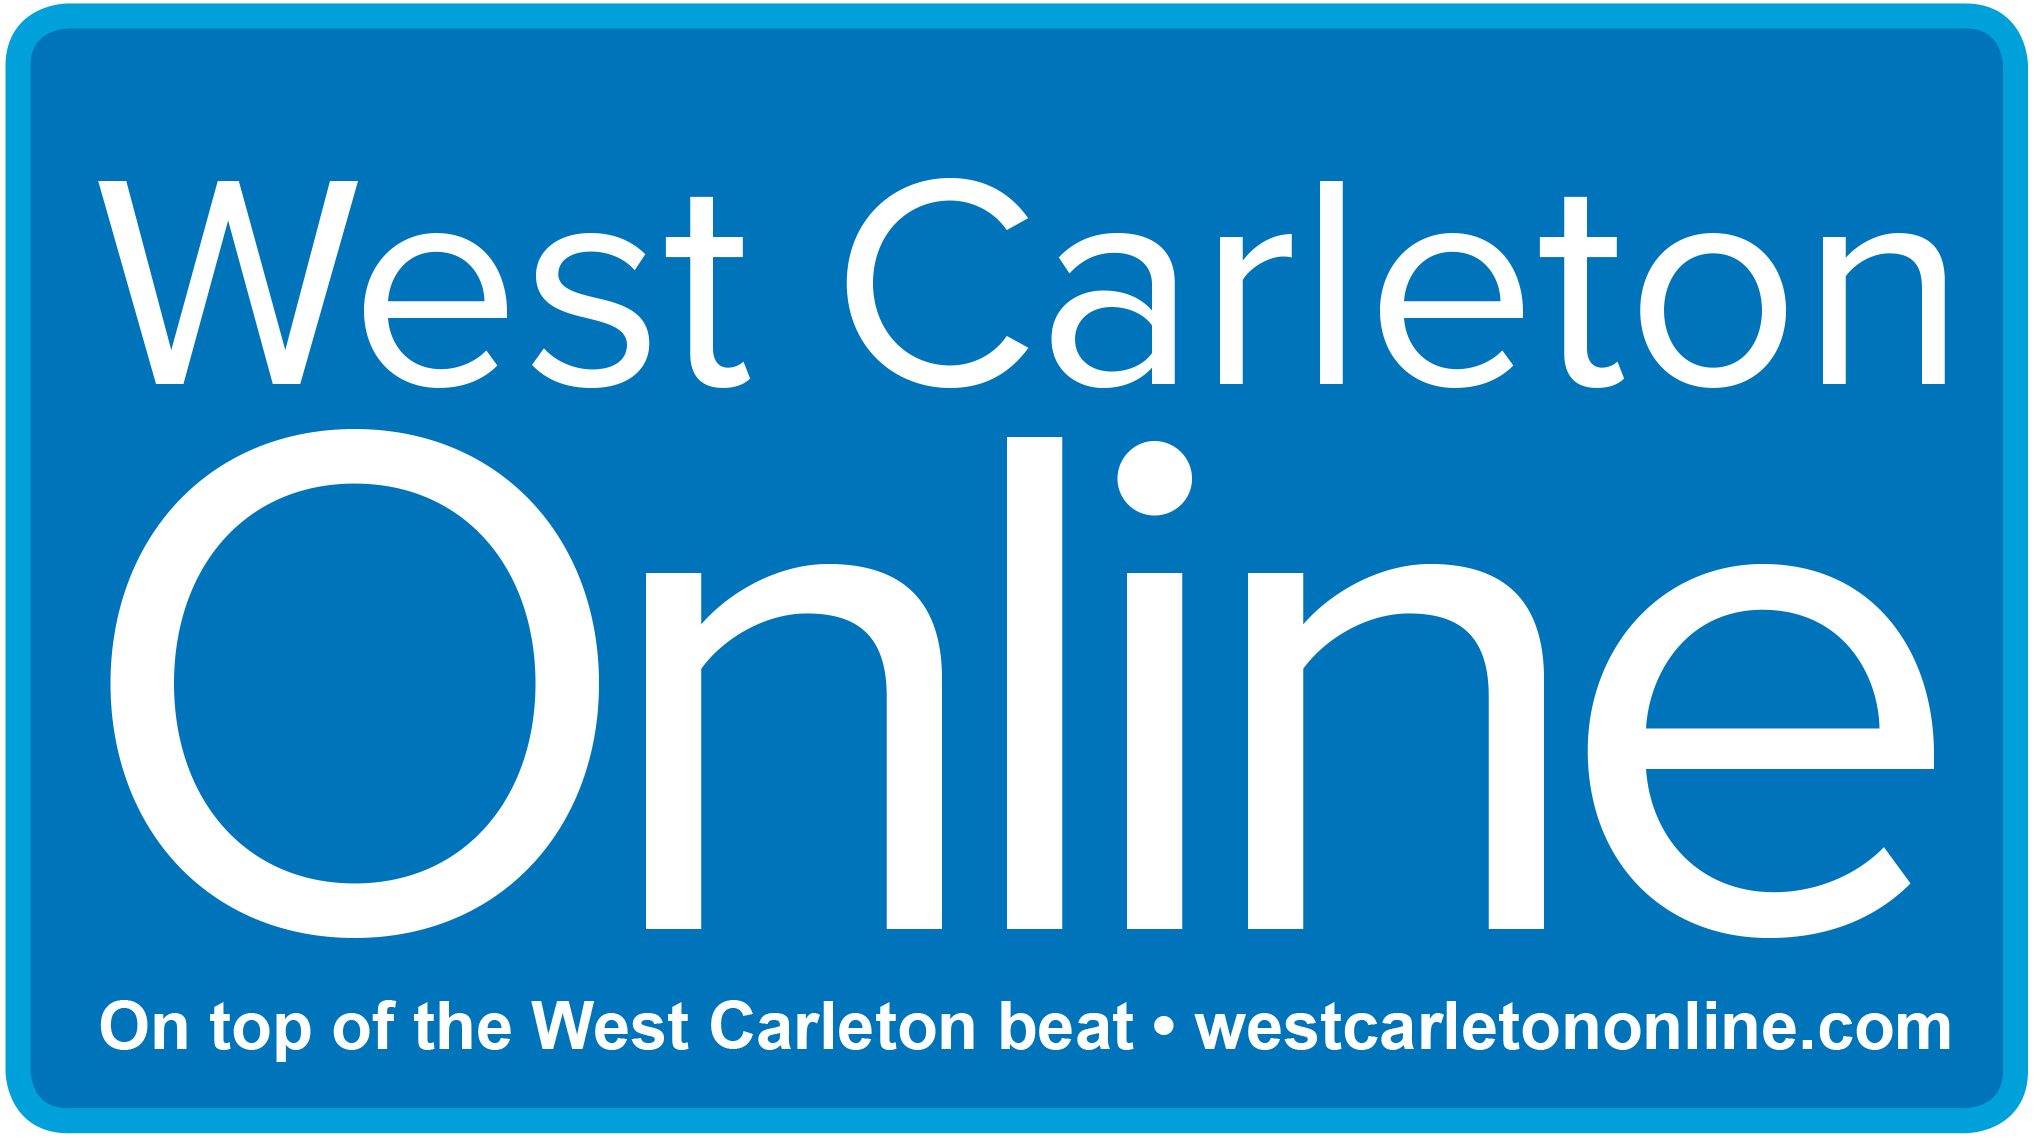 West Carleton Online